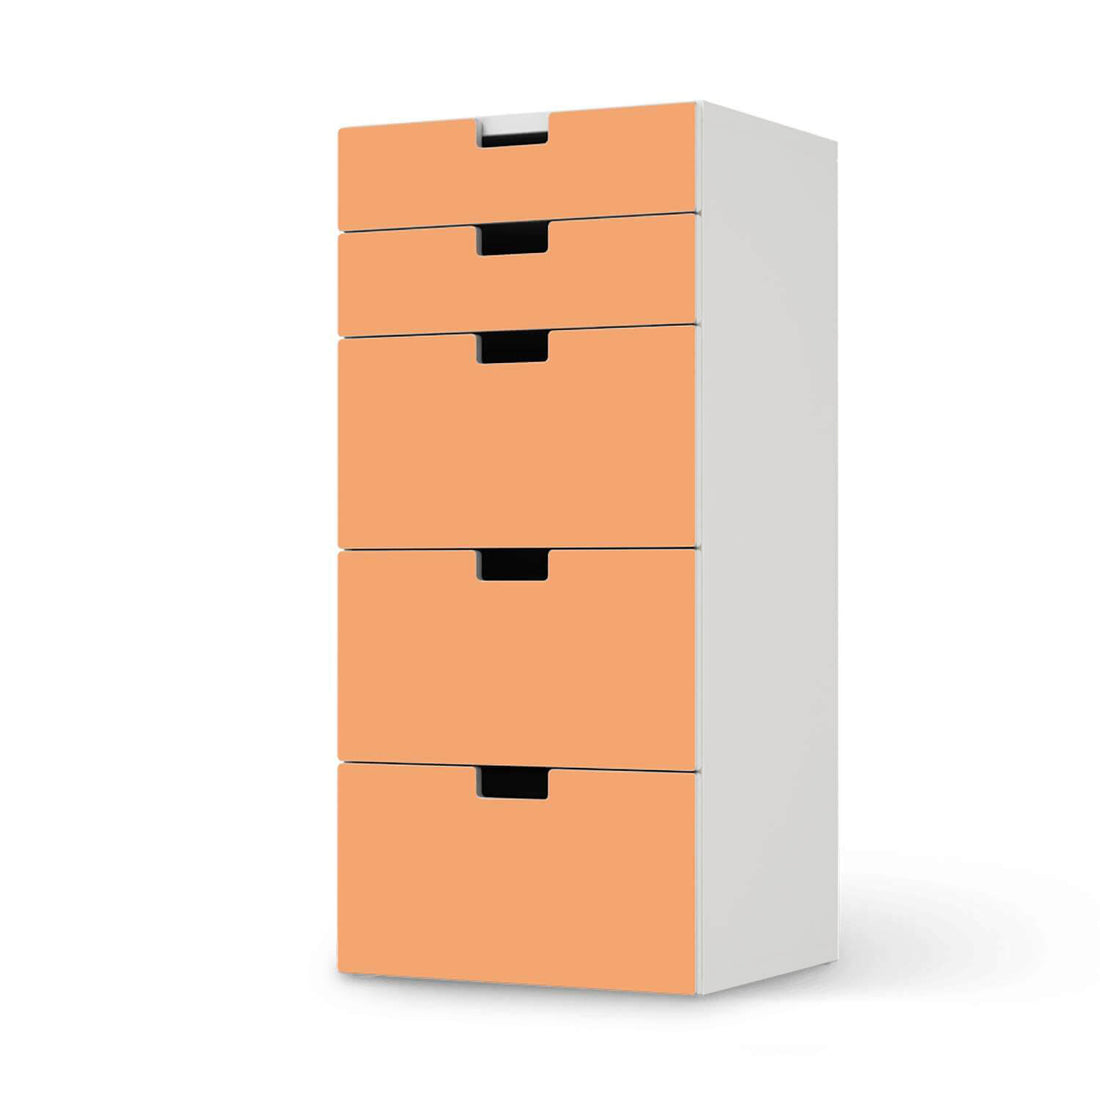 Möbel Klebefolie Orange Light - IKEA Stuva Kommode - 5 Schubladen  - weiss